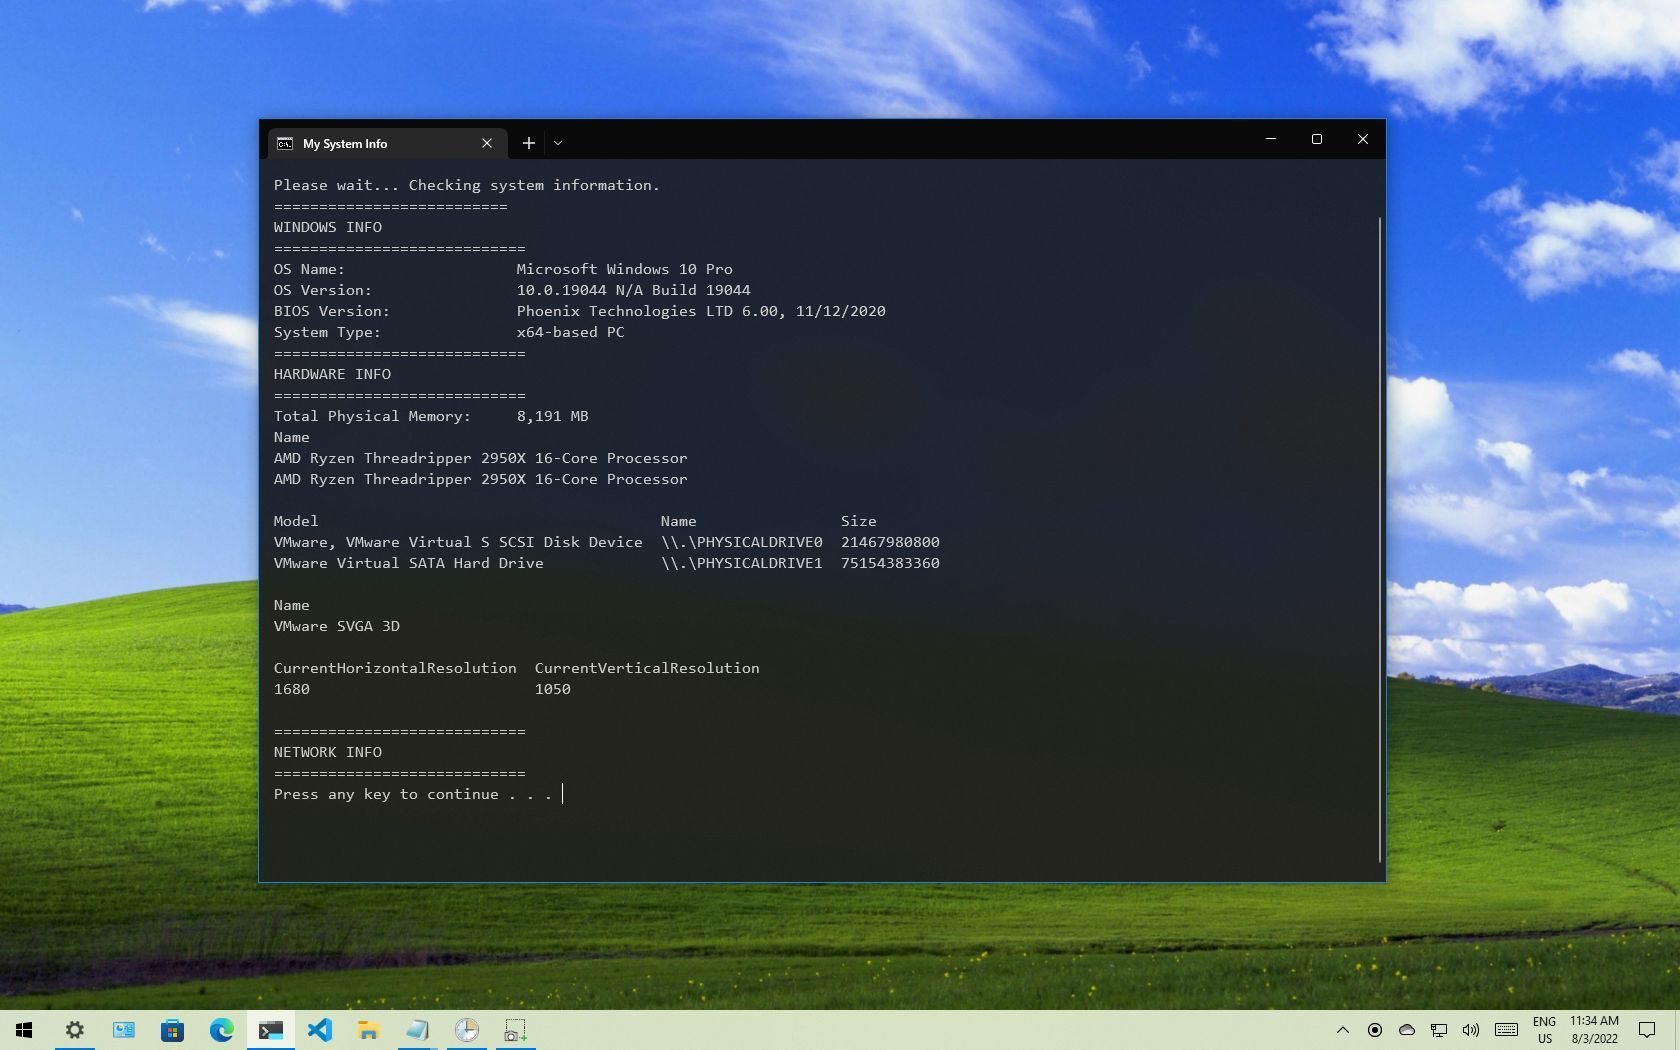 windows 10 pro batch file download